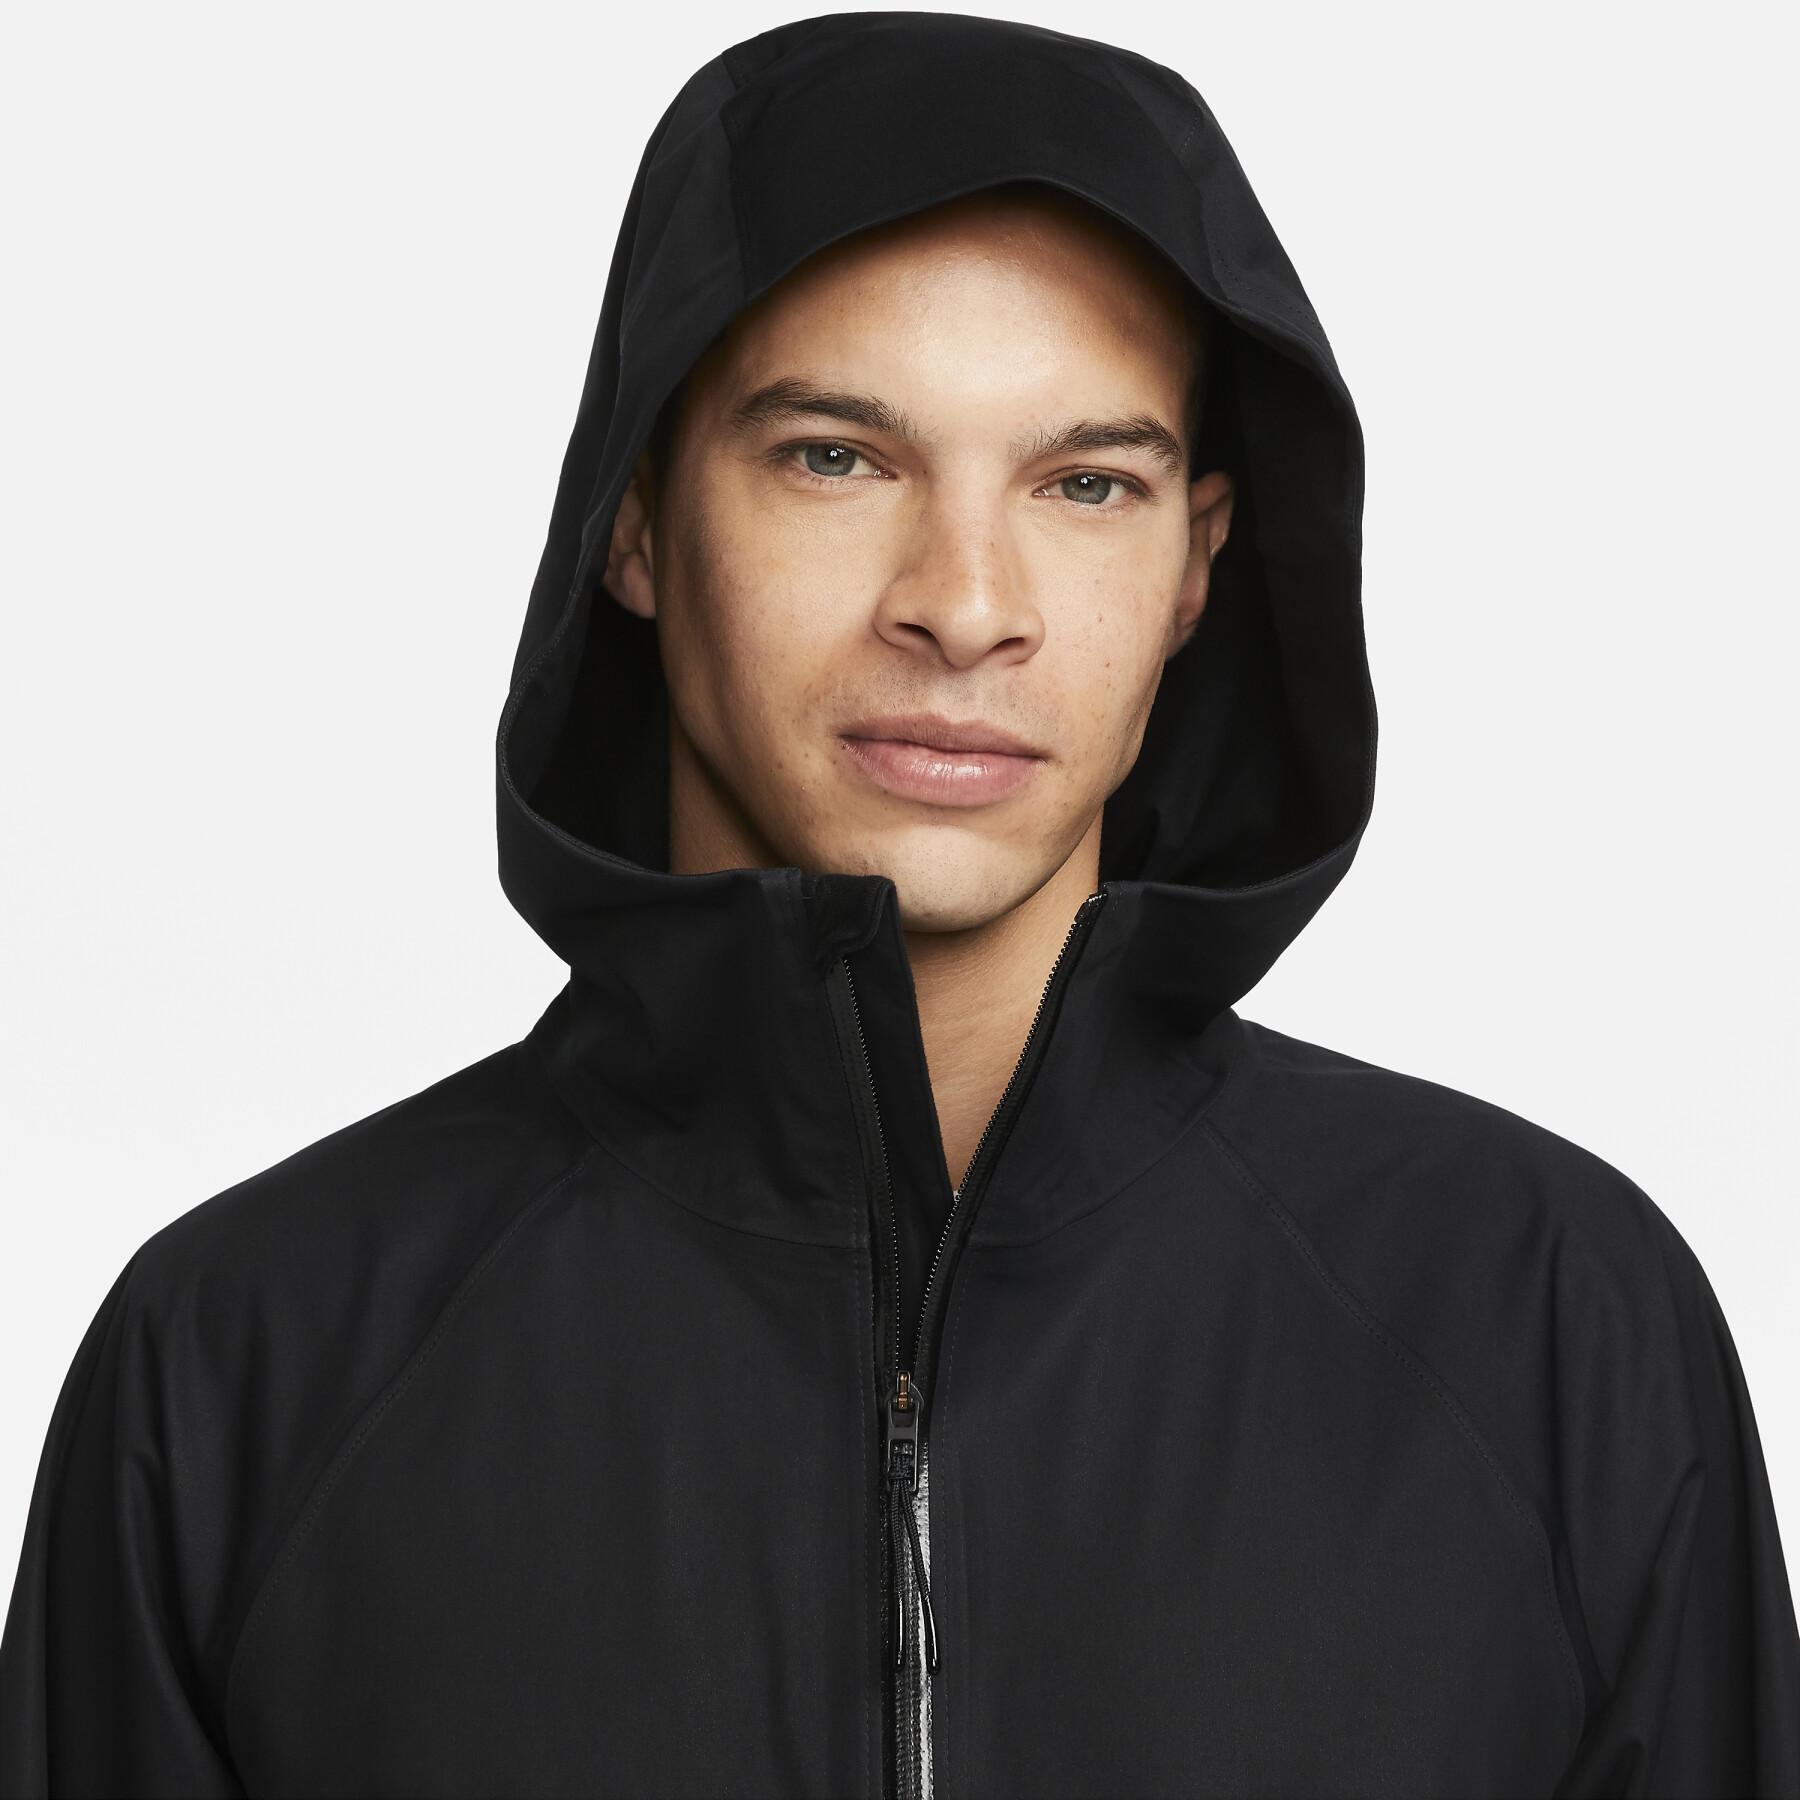 Sweat jacket Nike Storm-Fit ADV APS - Jackets - Men's Clothing - Fitness